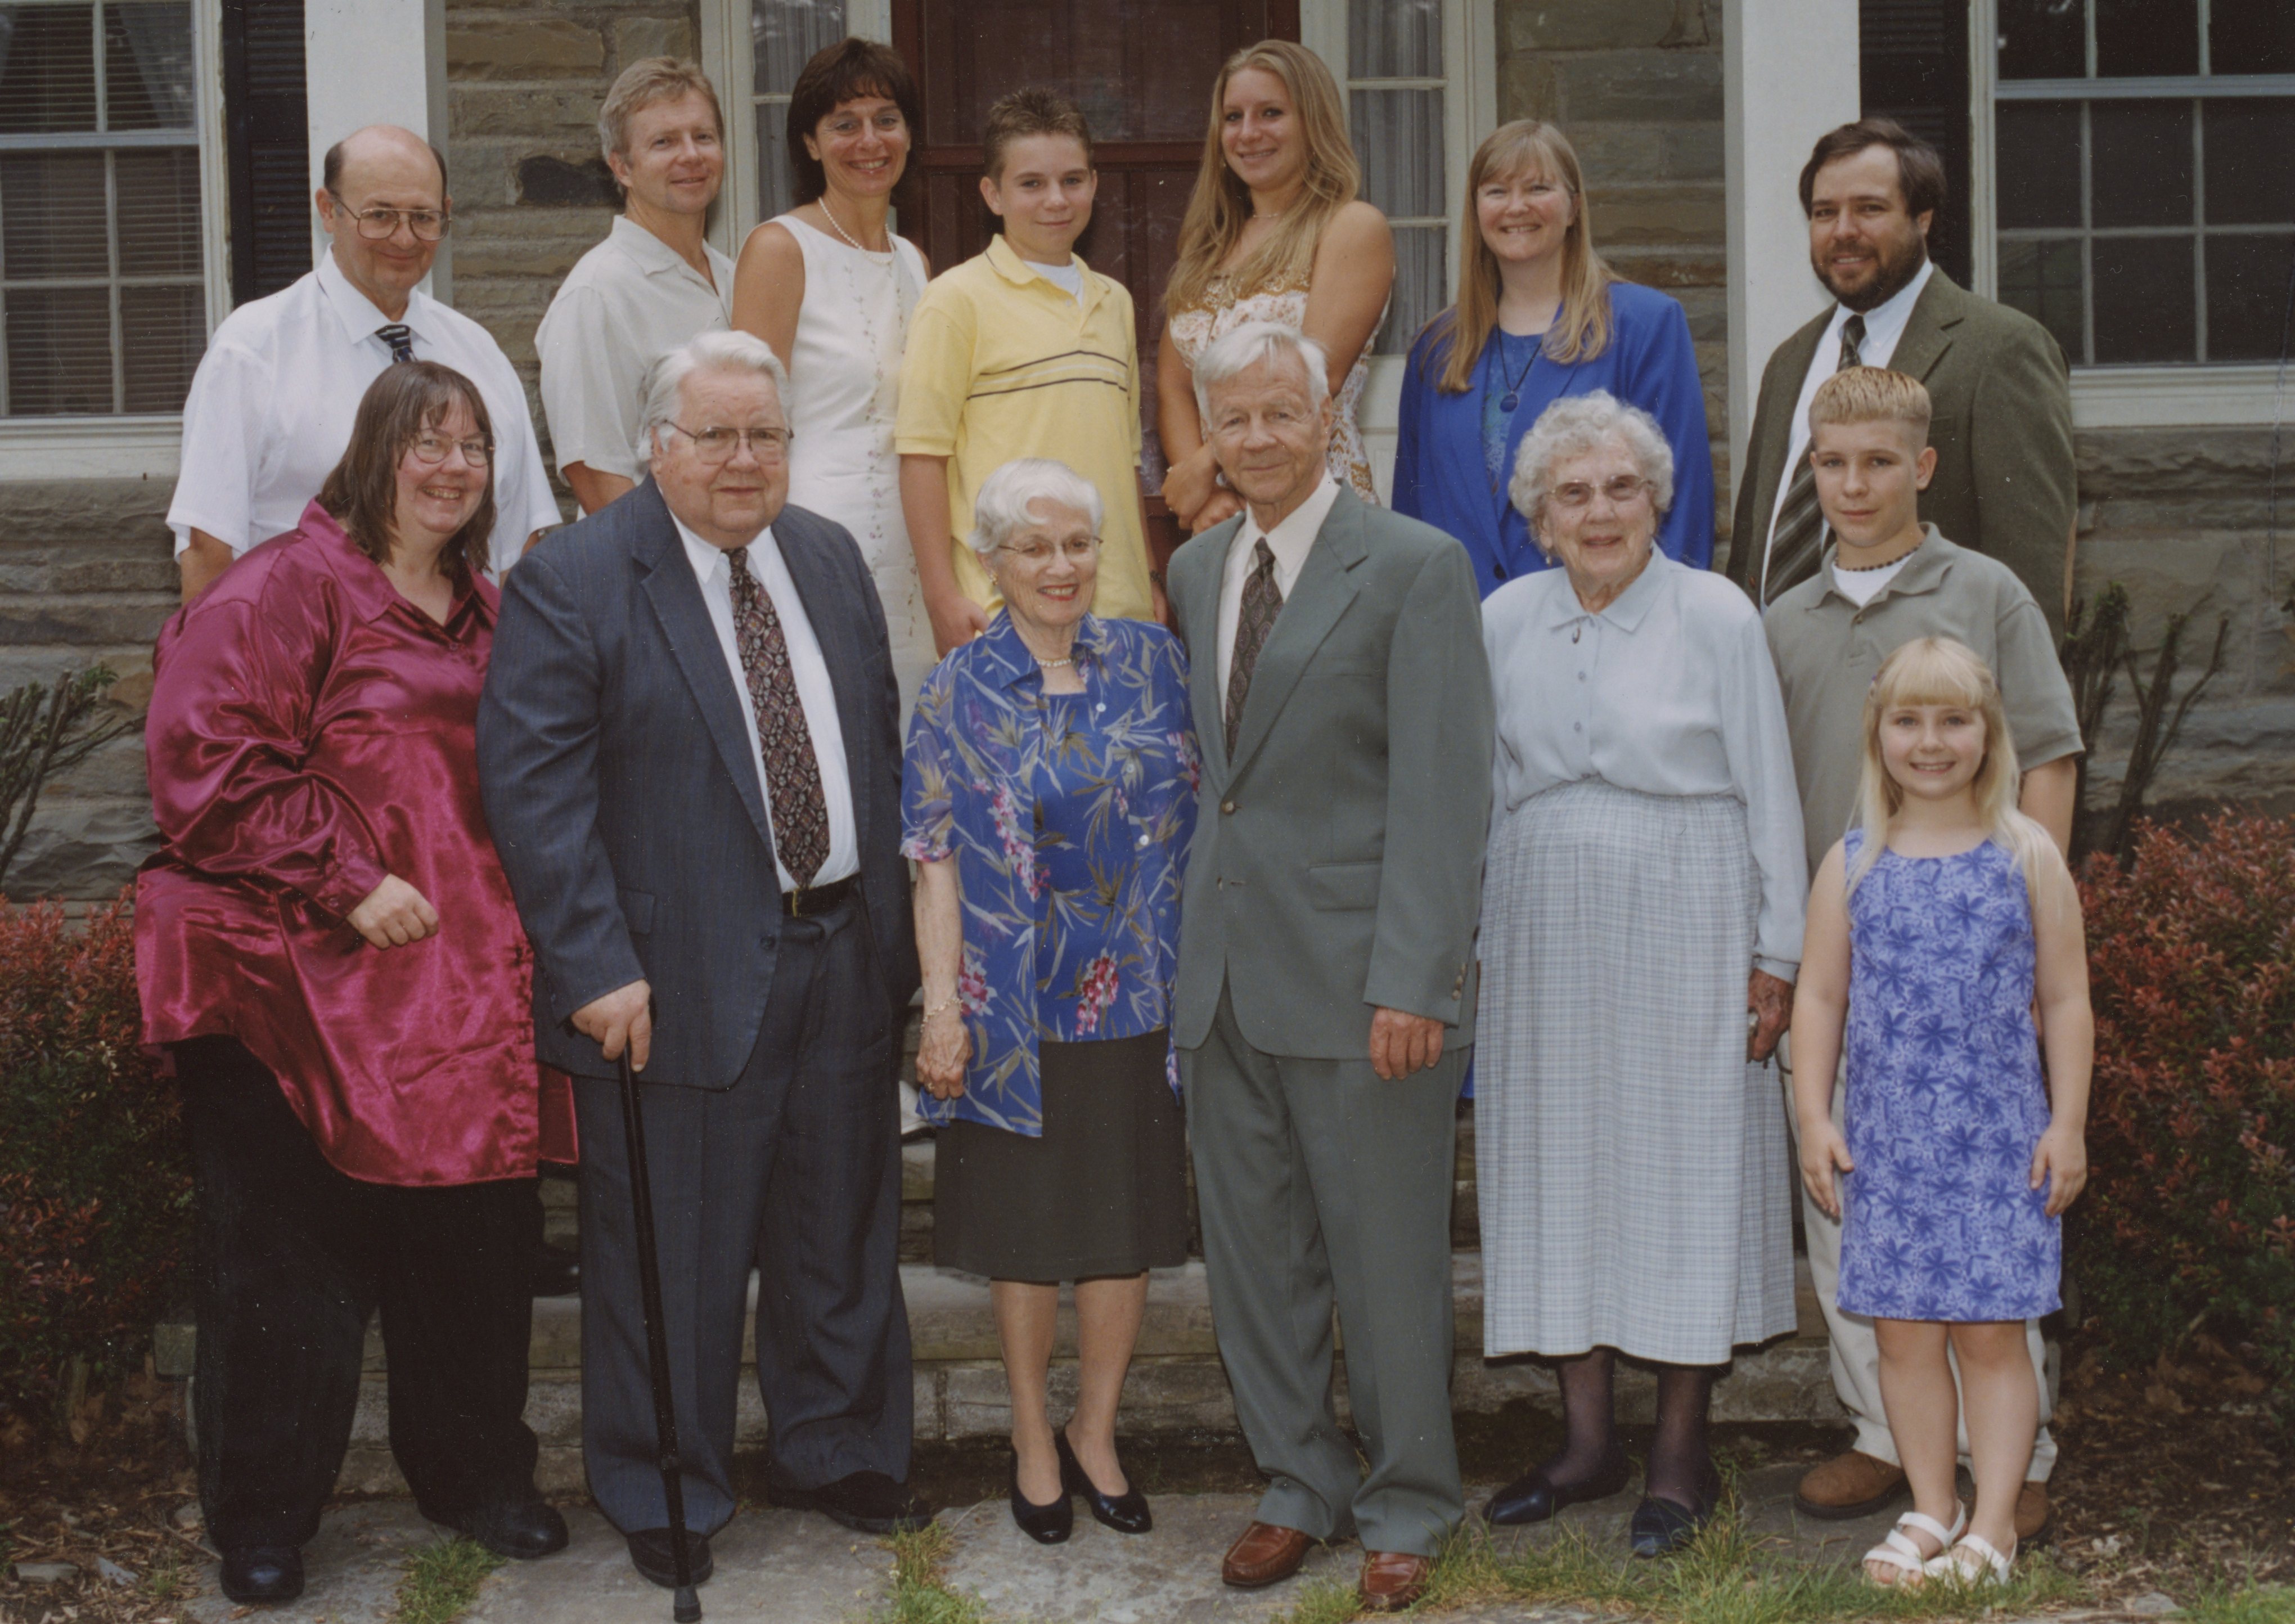 Family Reunion Group Photo - Before Vivid-Pix